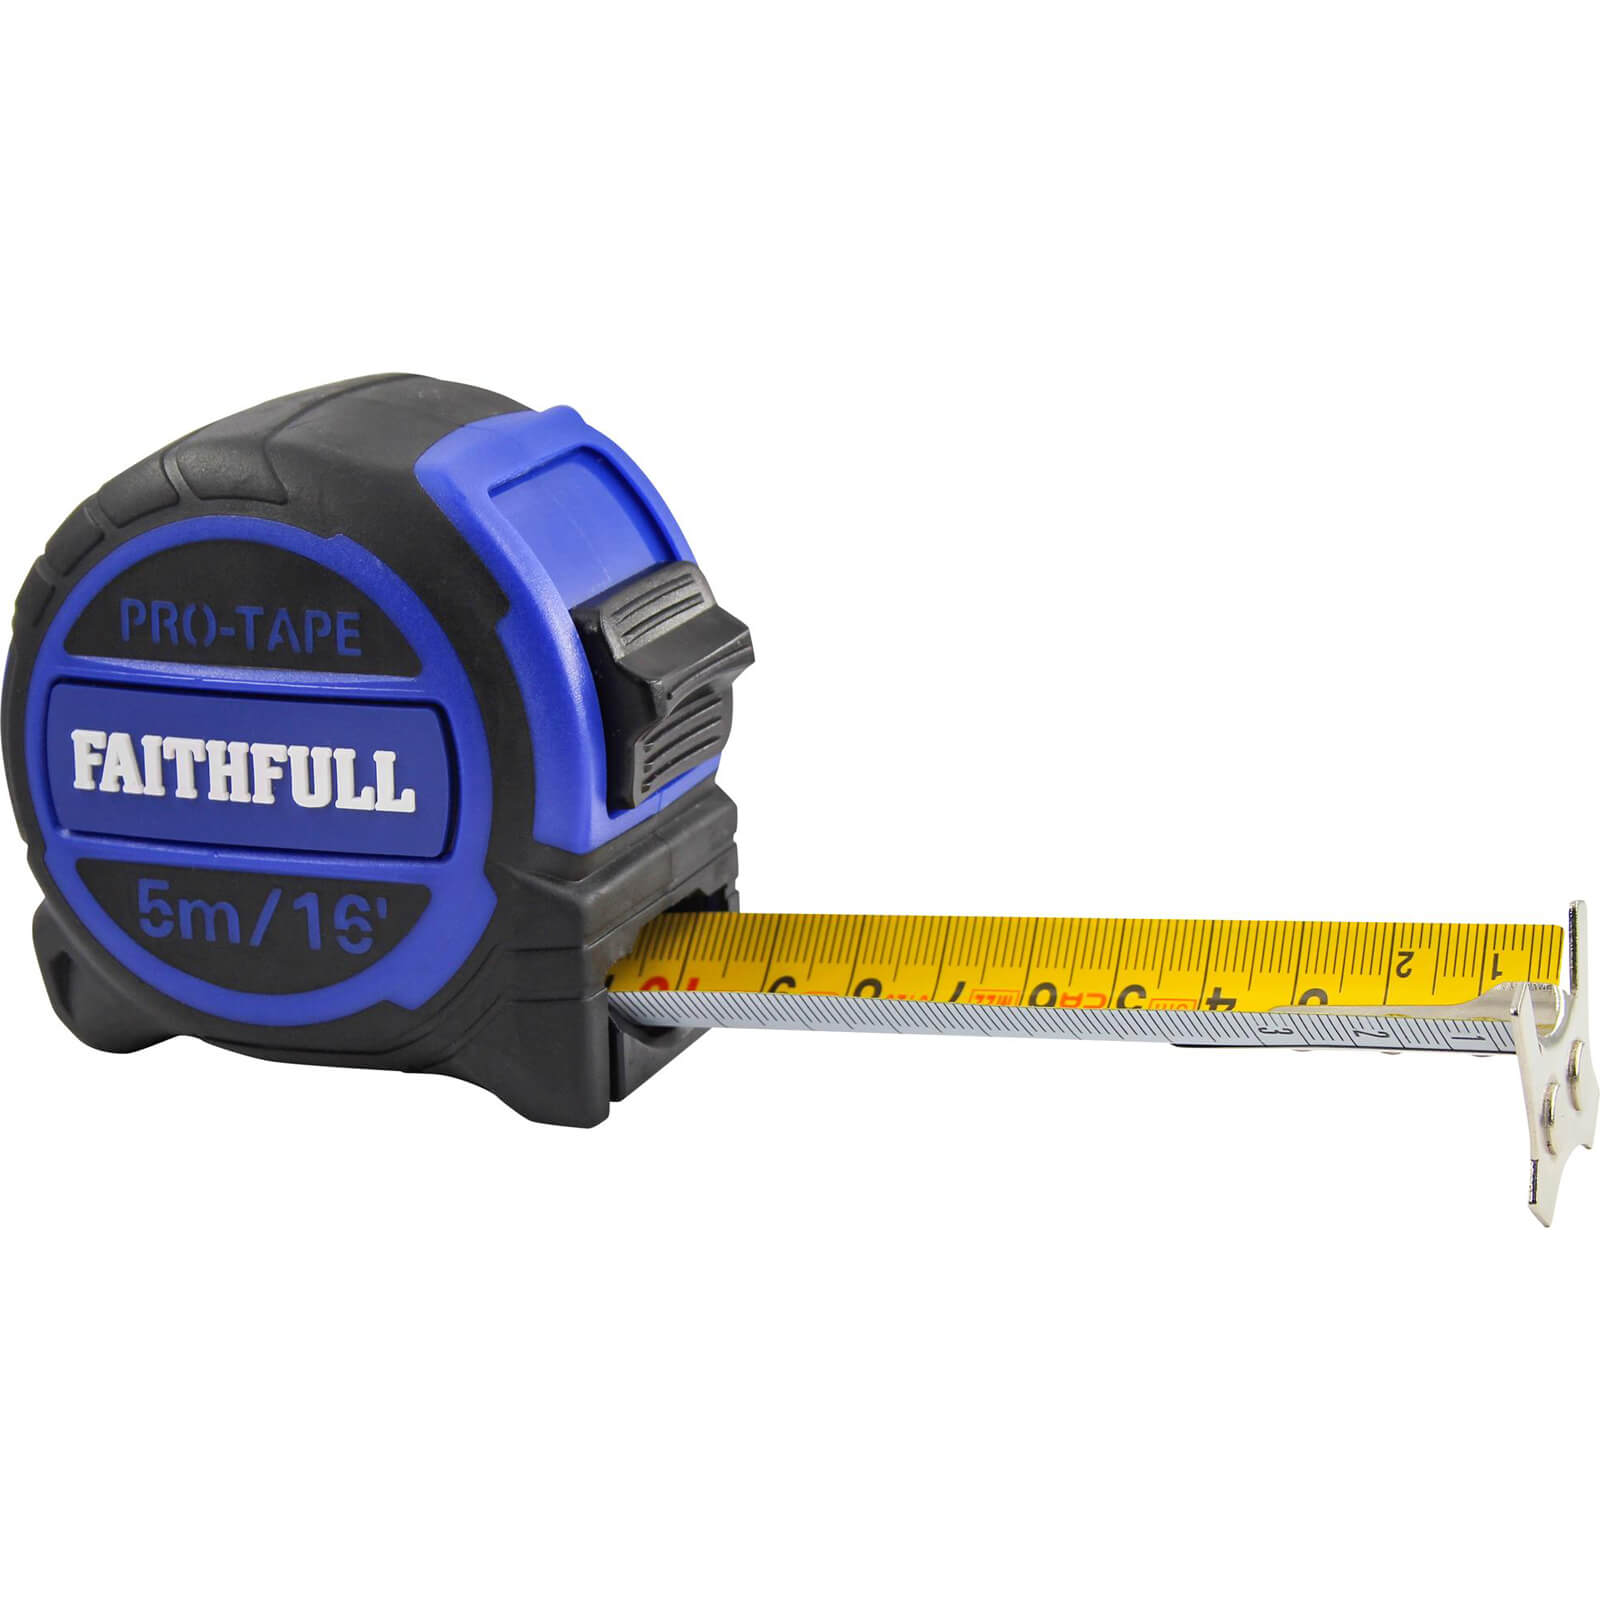 Photos - Tape Measure and Surveyor Tape Faithfull Pro Tape Measure Imperial & Metric 16ft / 5m 32mm TM532MI 